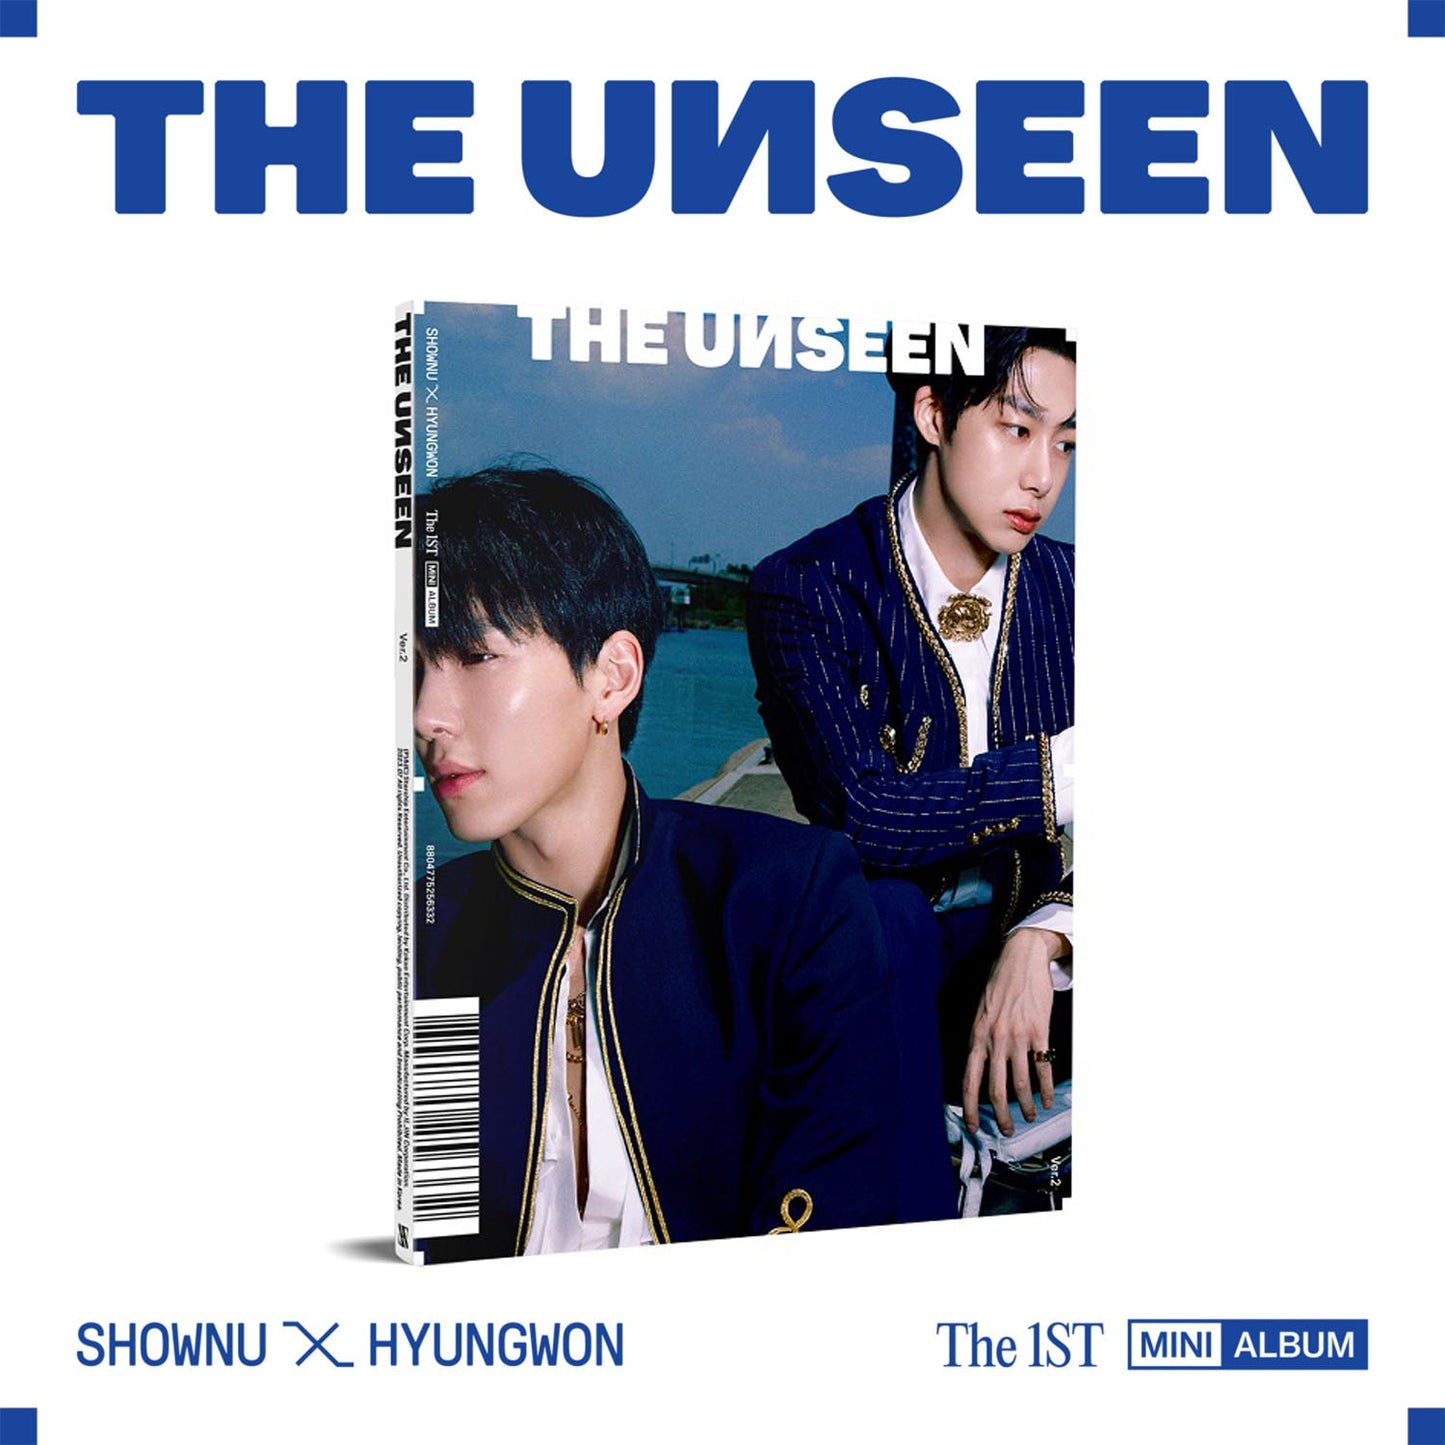 SHOWNU X HYUNGWON 1ST MINI ALBUM 'THE UNSEEN' VERSION 2 COVER